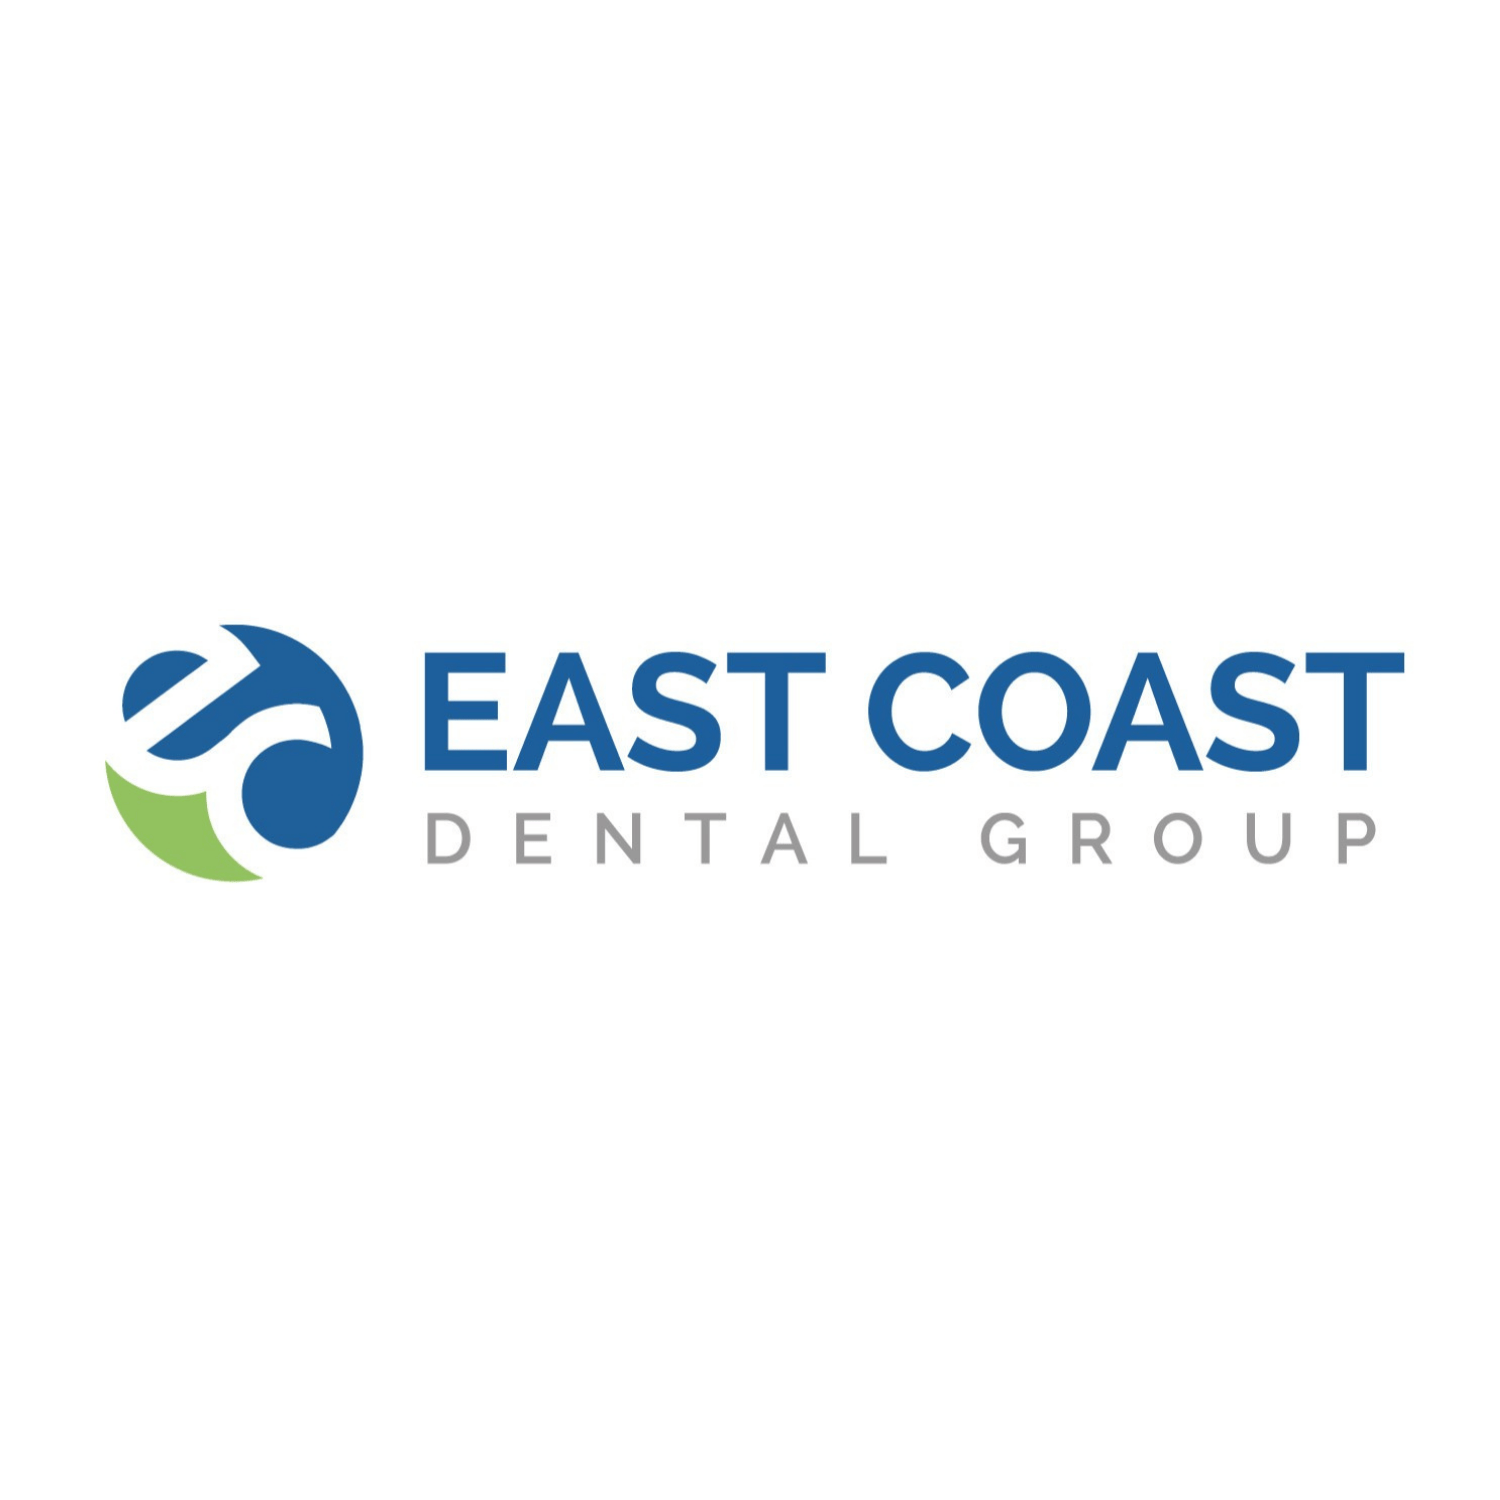 east coast dental group logo no background